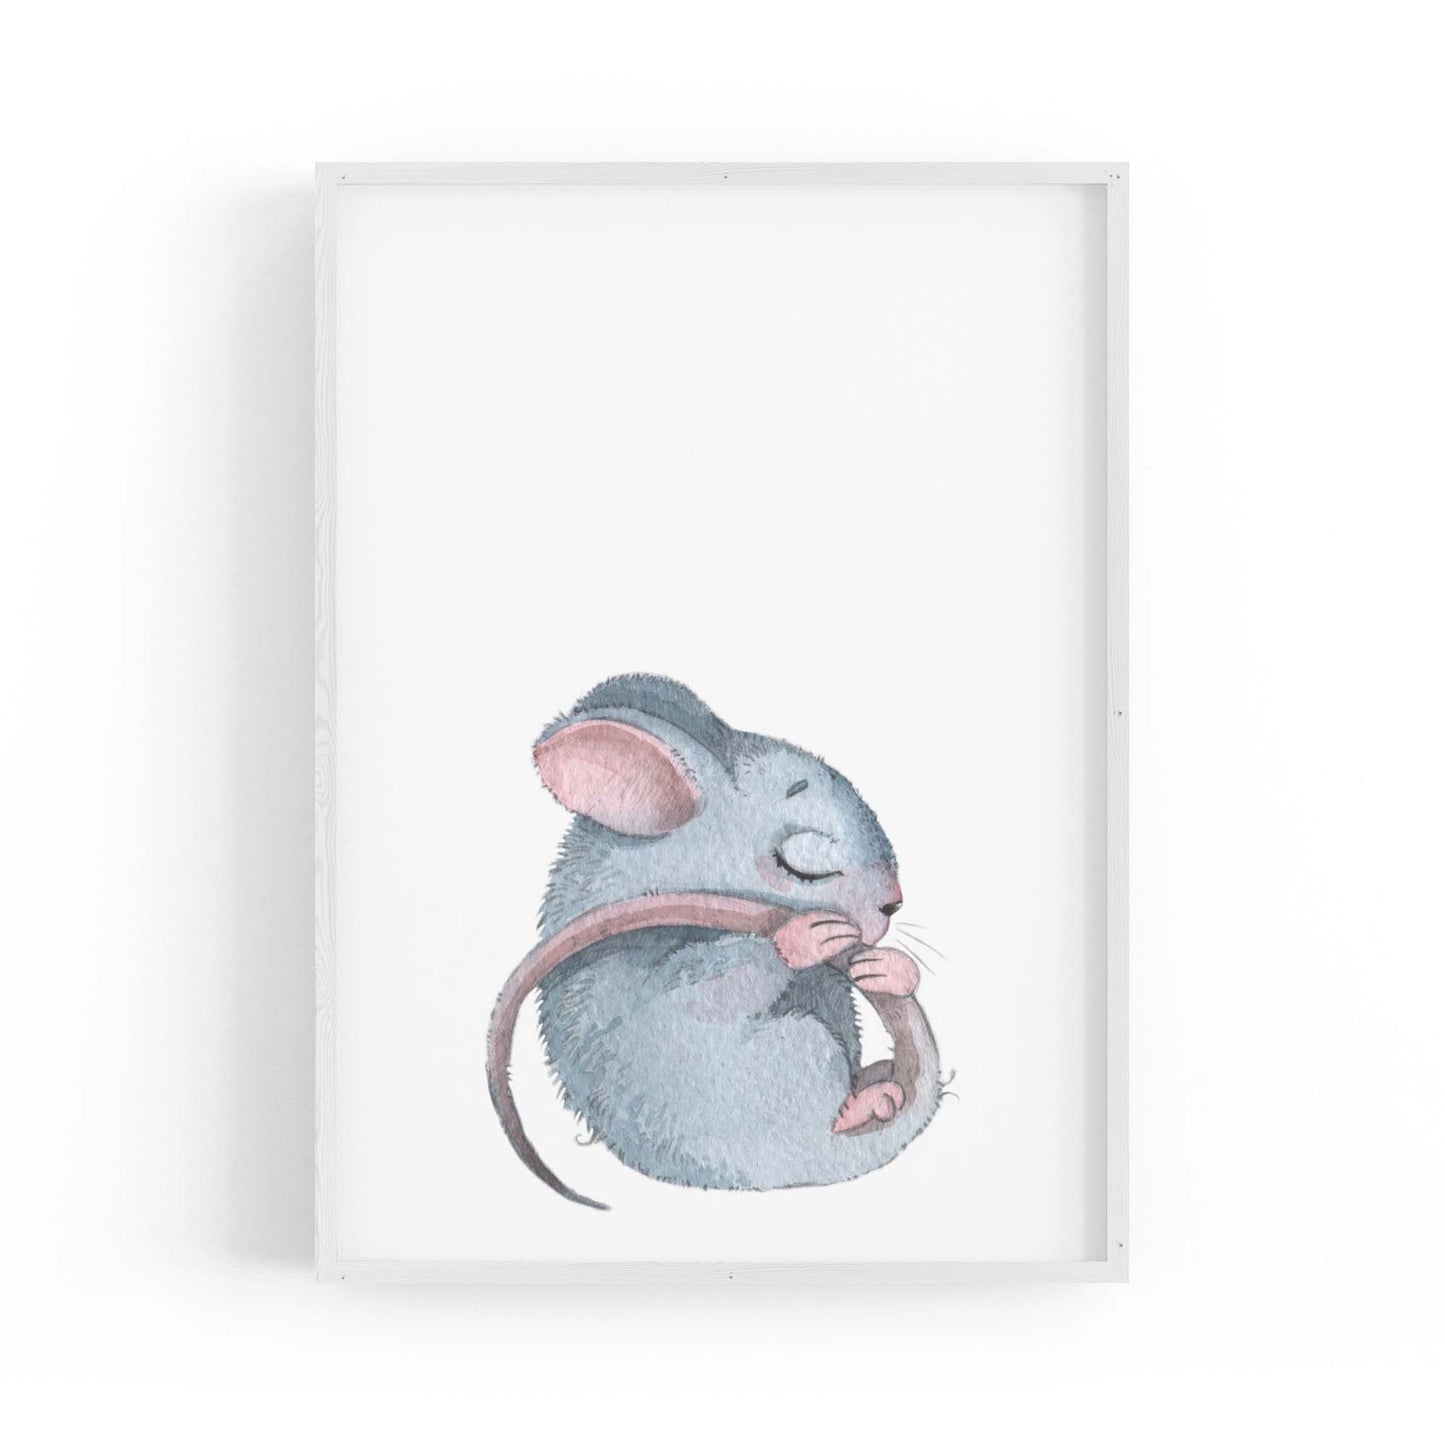 Sleeping Mouse Cartoon Animal Nursery Wall Art #1 - The Affordable Art Company